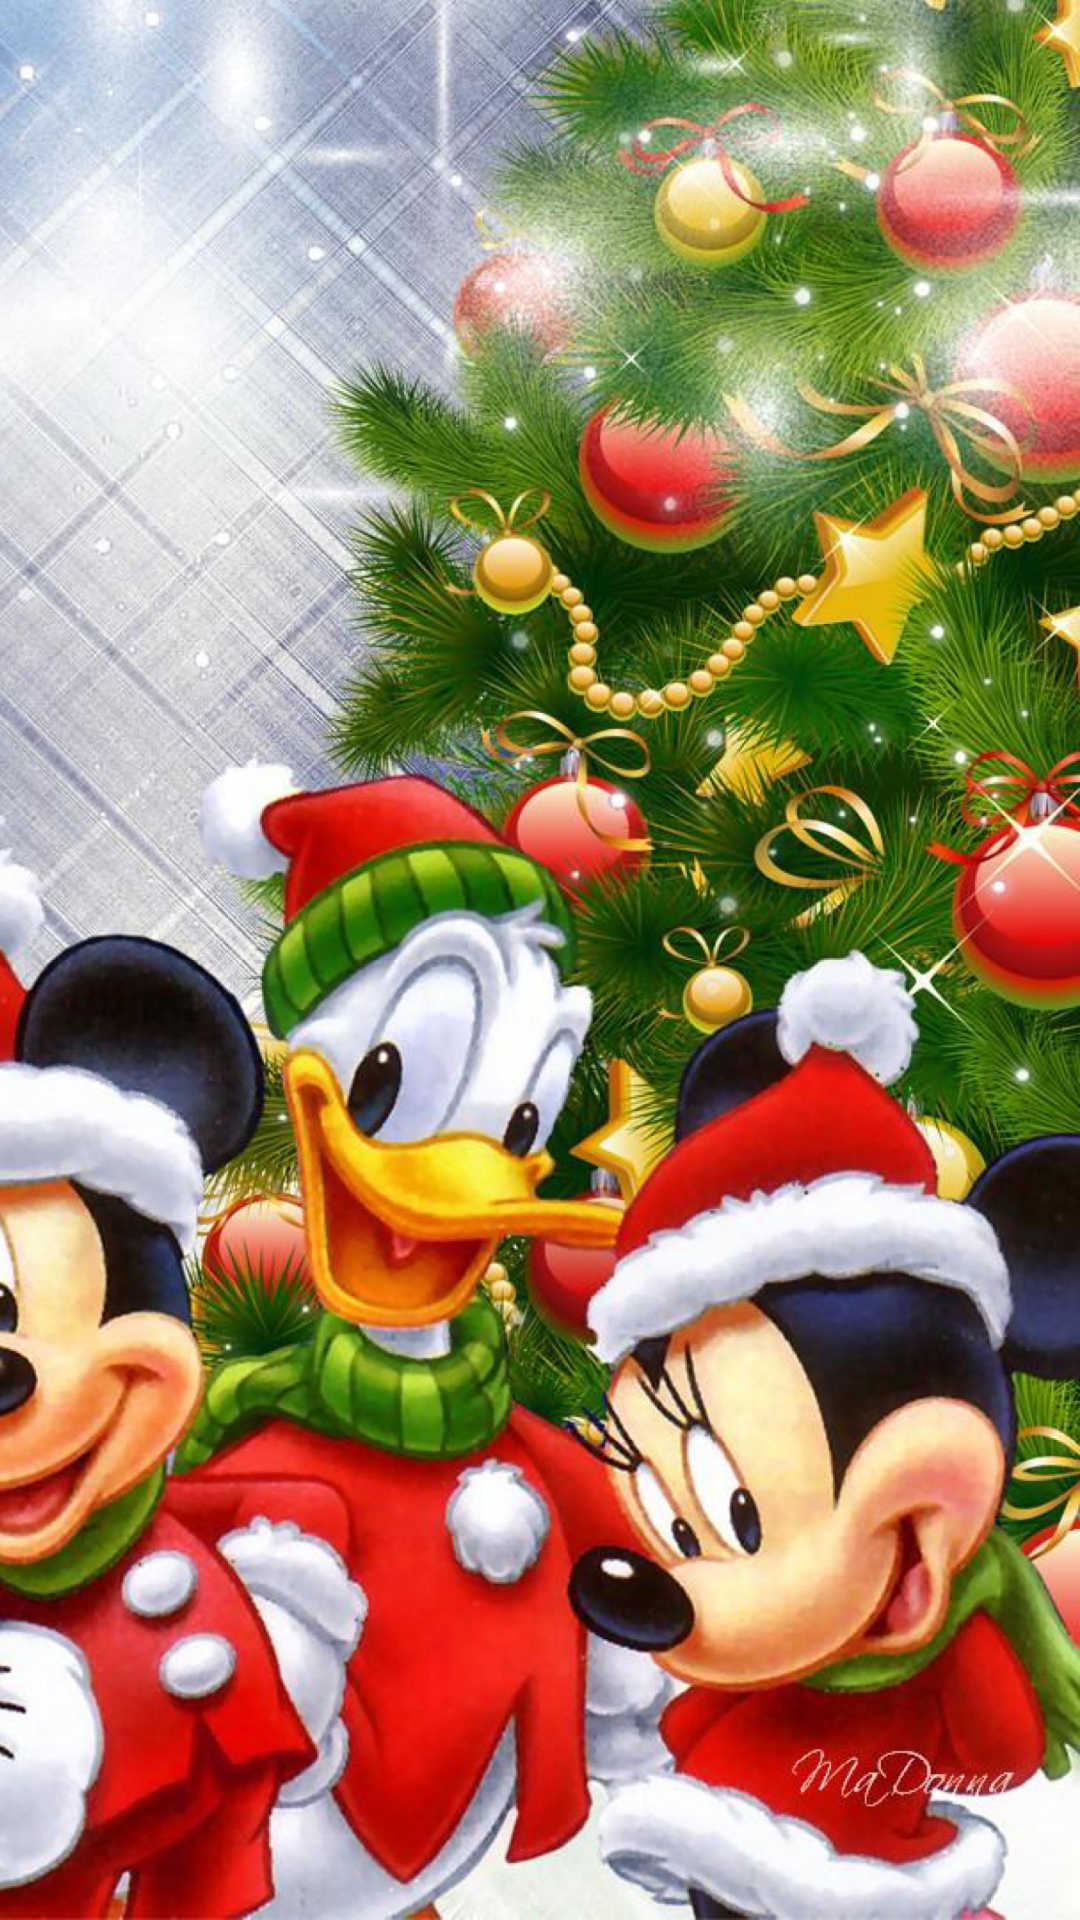 Mickey's Christmas wallpaper 1080x1920